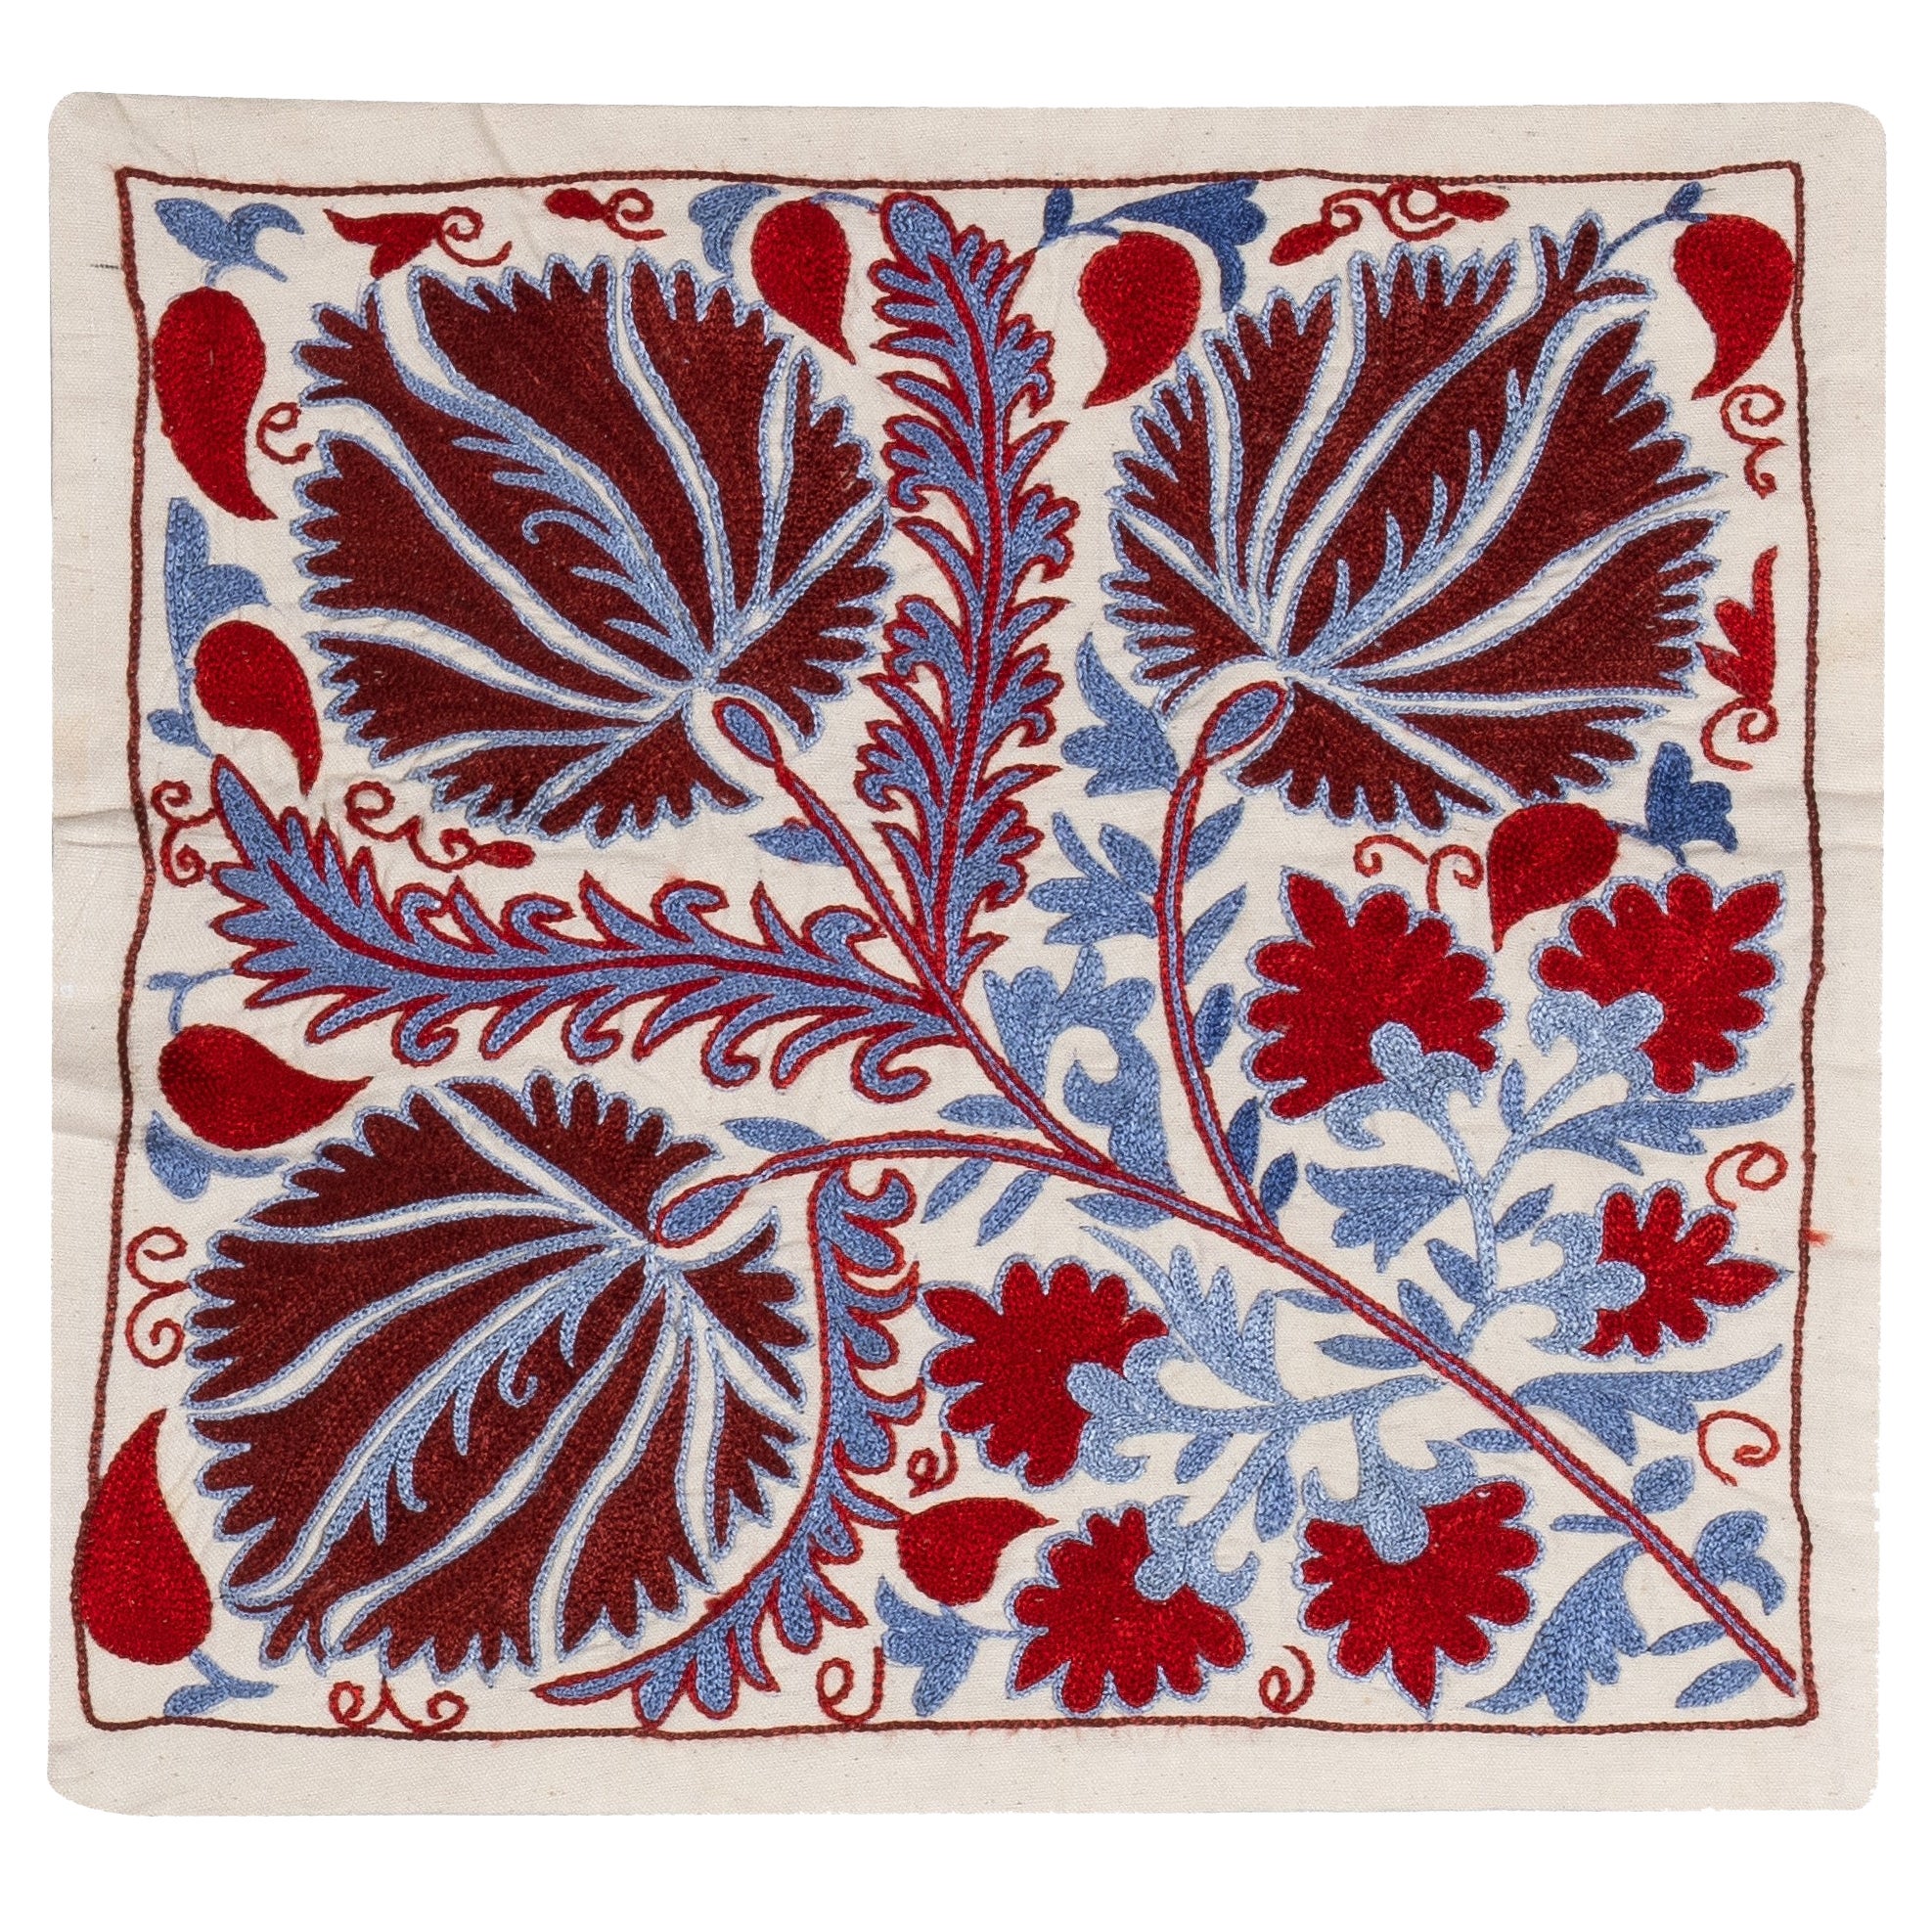 19"x19" Botanical Leaves Design Lace Pillow, Embroidered Cushion, Handmade Sham